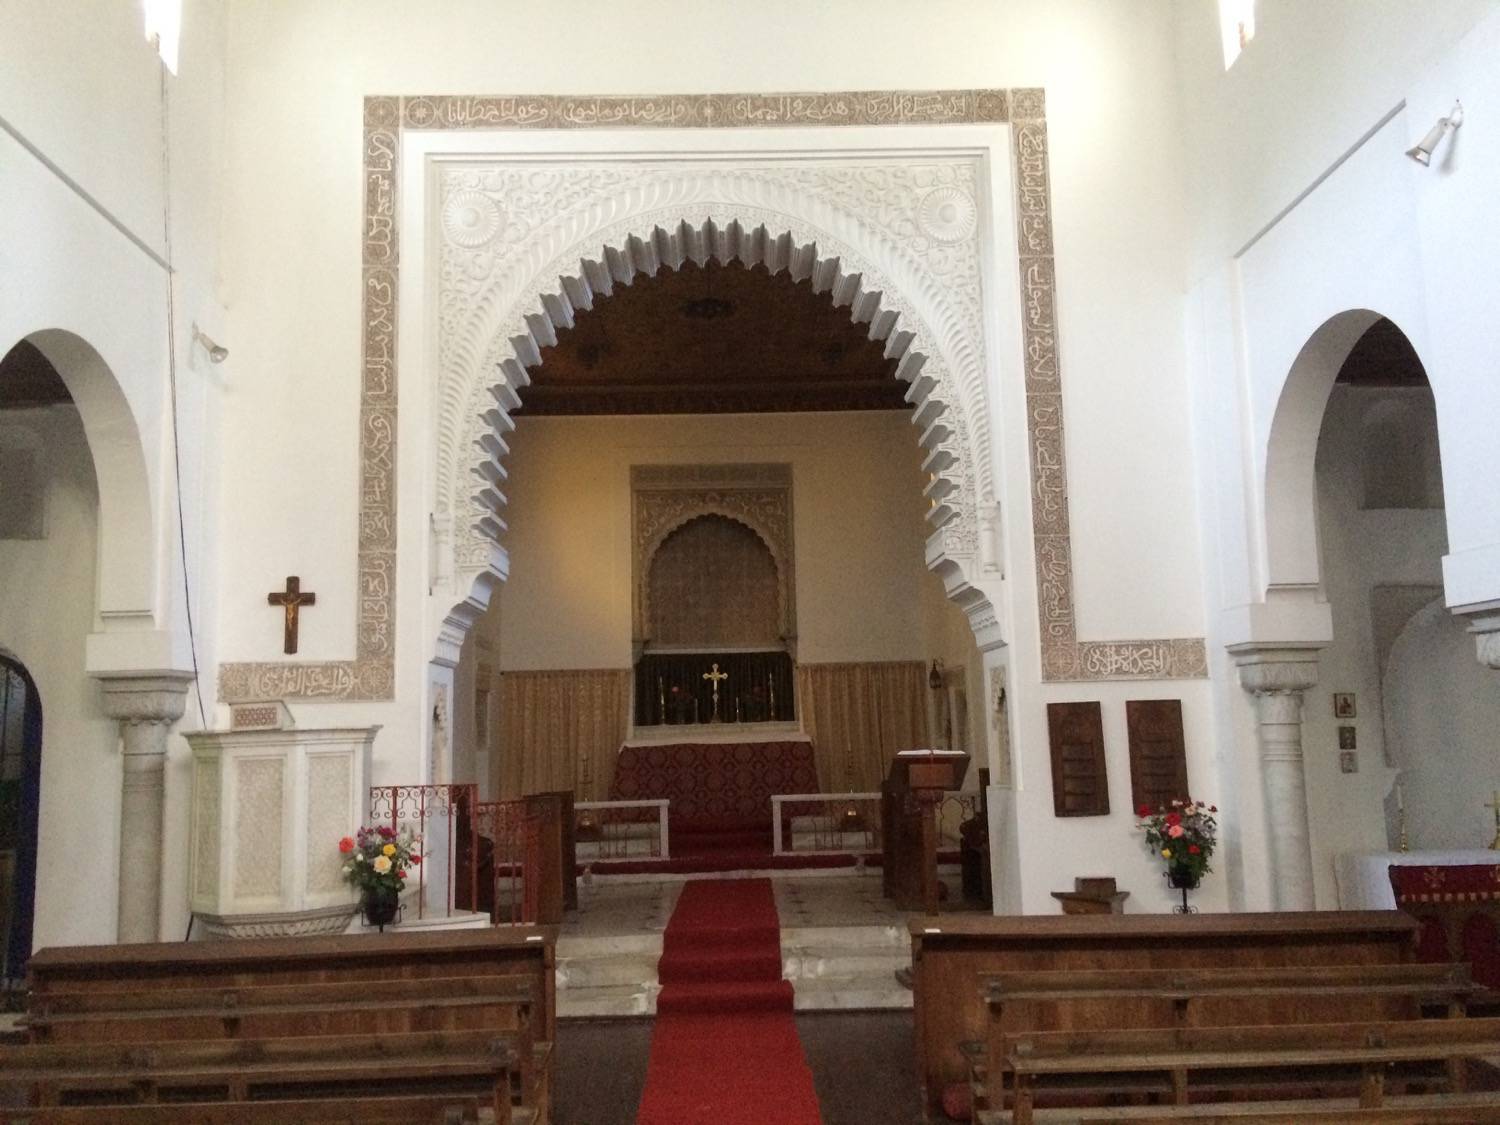 Interior view toward the altar